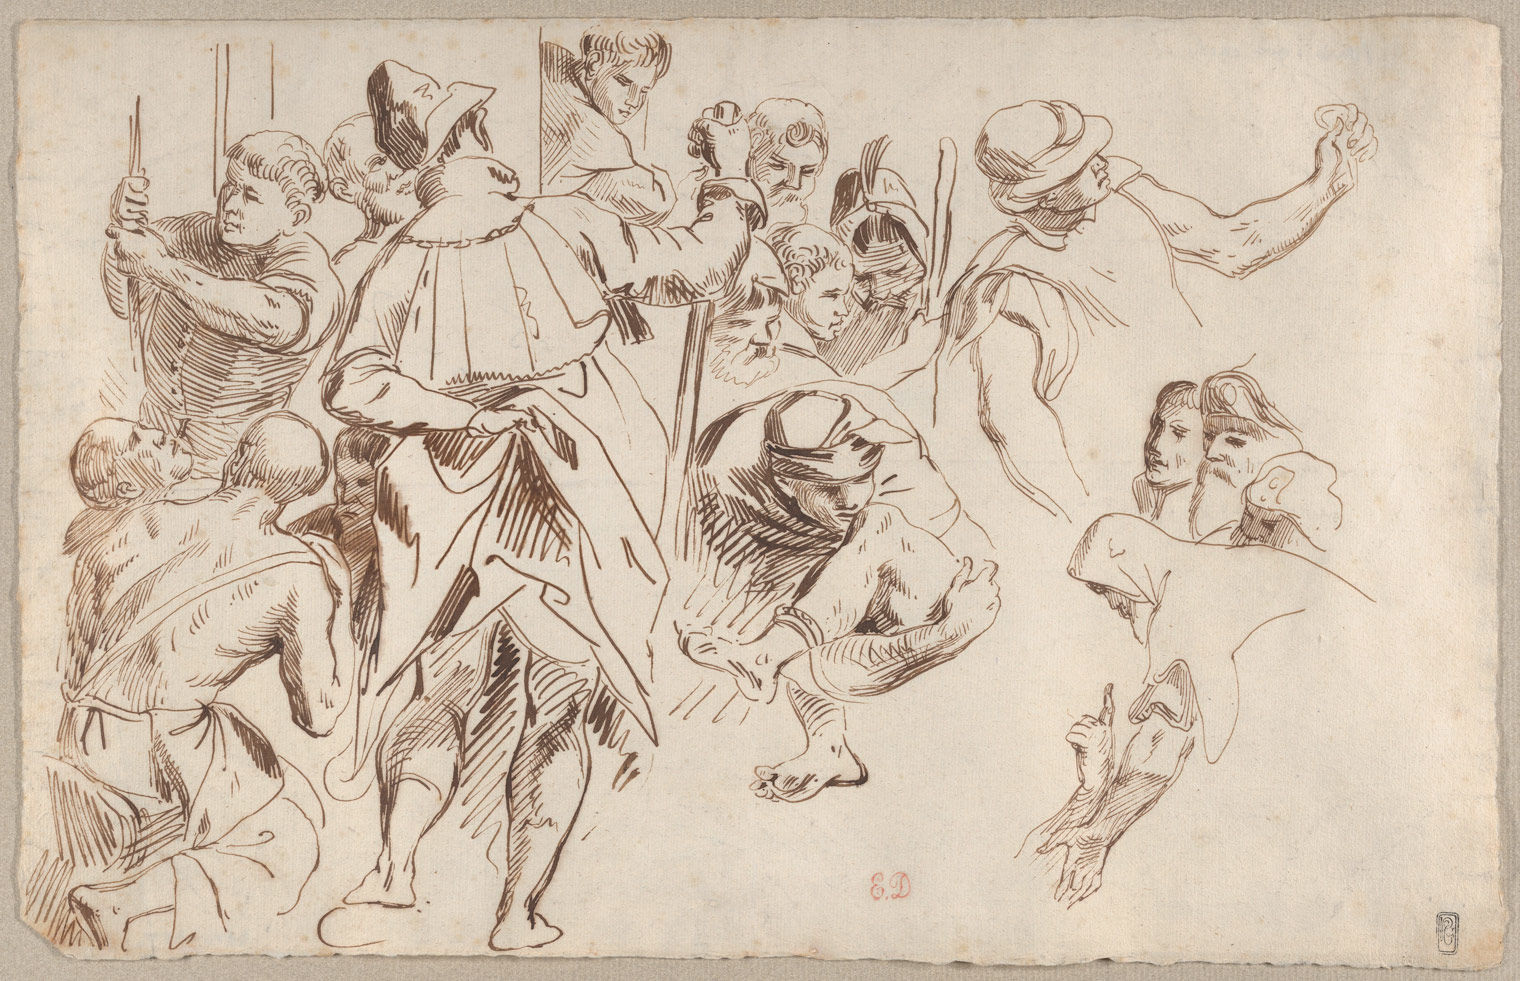 Delacroix sketches of figures from Veronese's "Martyrdom of Saint Sebastian"